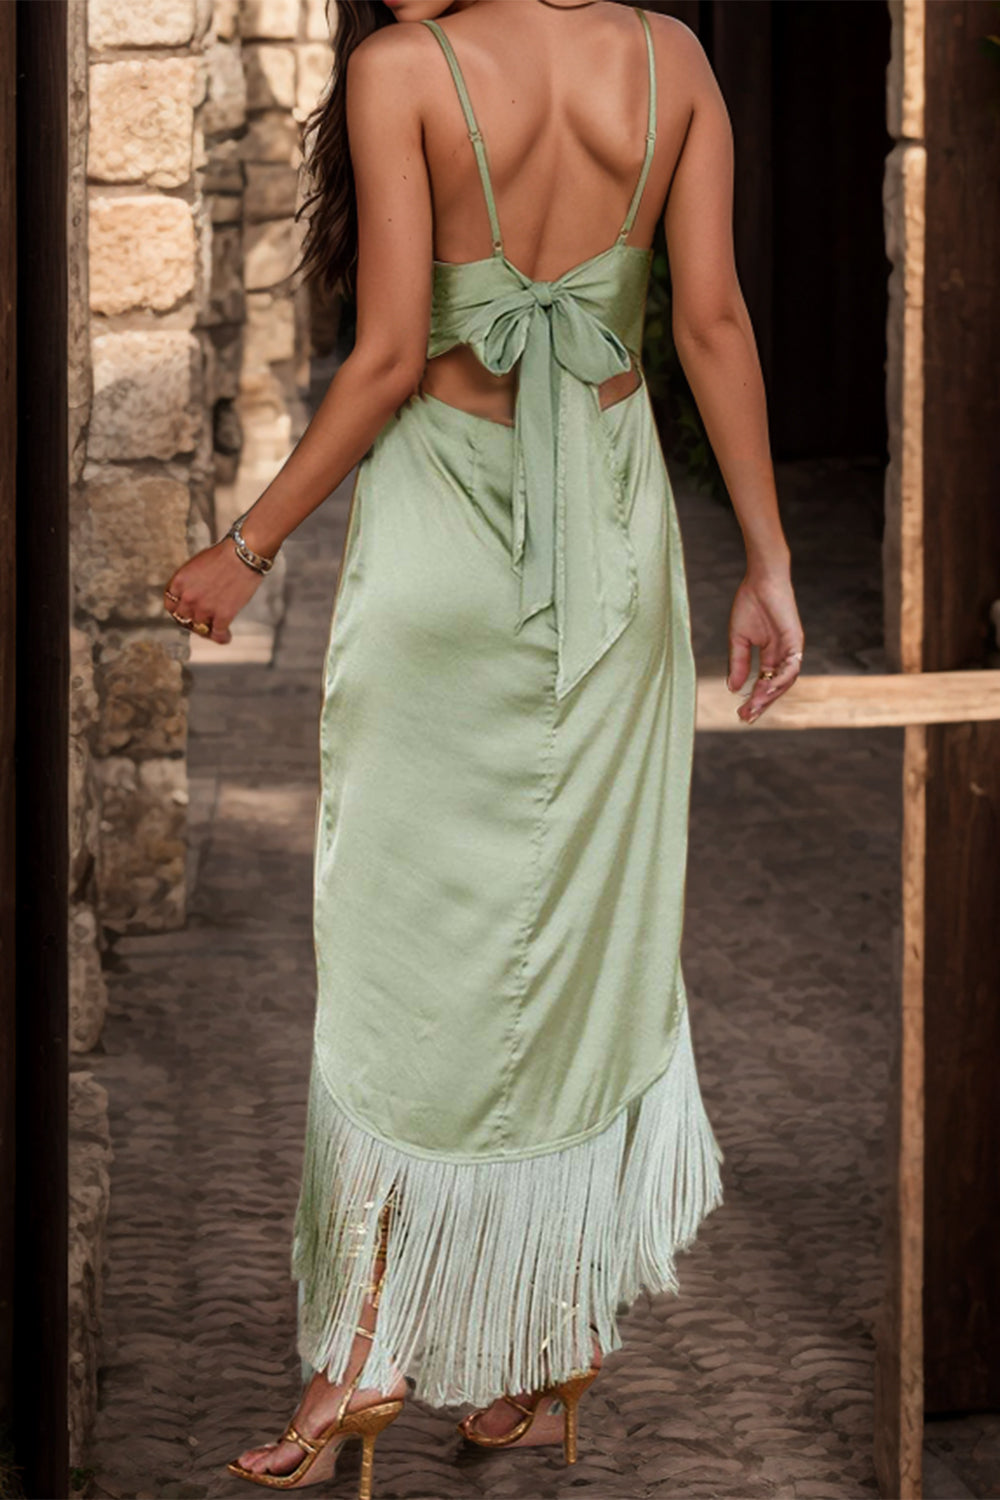 Beach Wedding Guest Attire: Elegant Square Neck Cami Dress with Fringe High-Low Hem